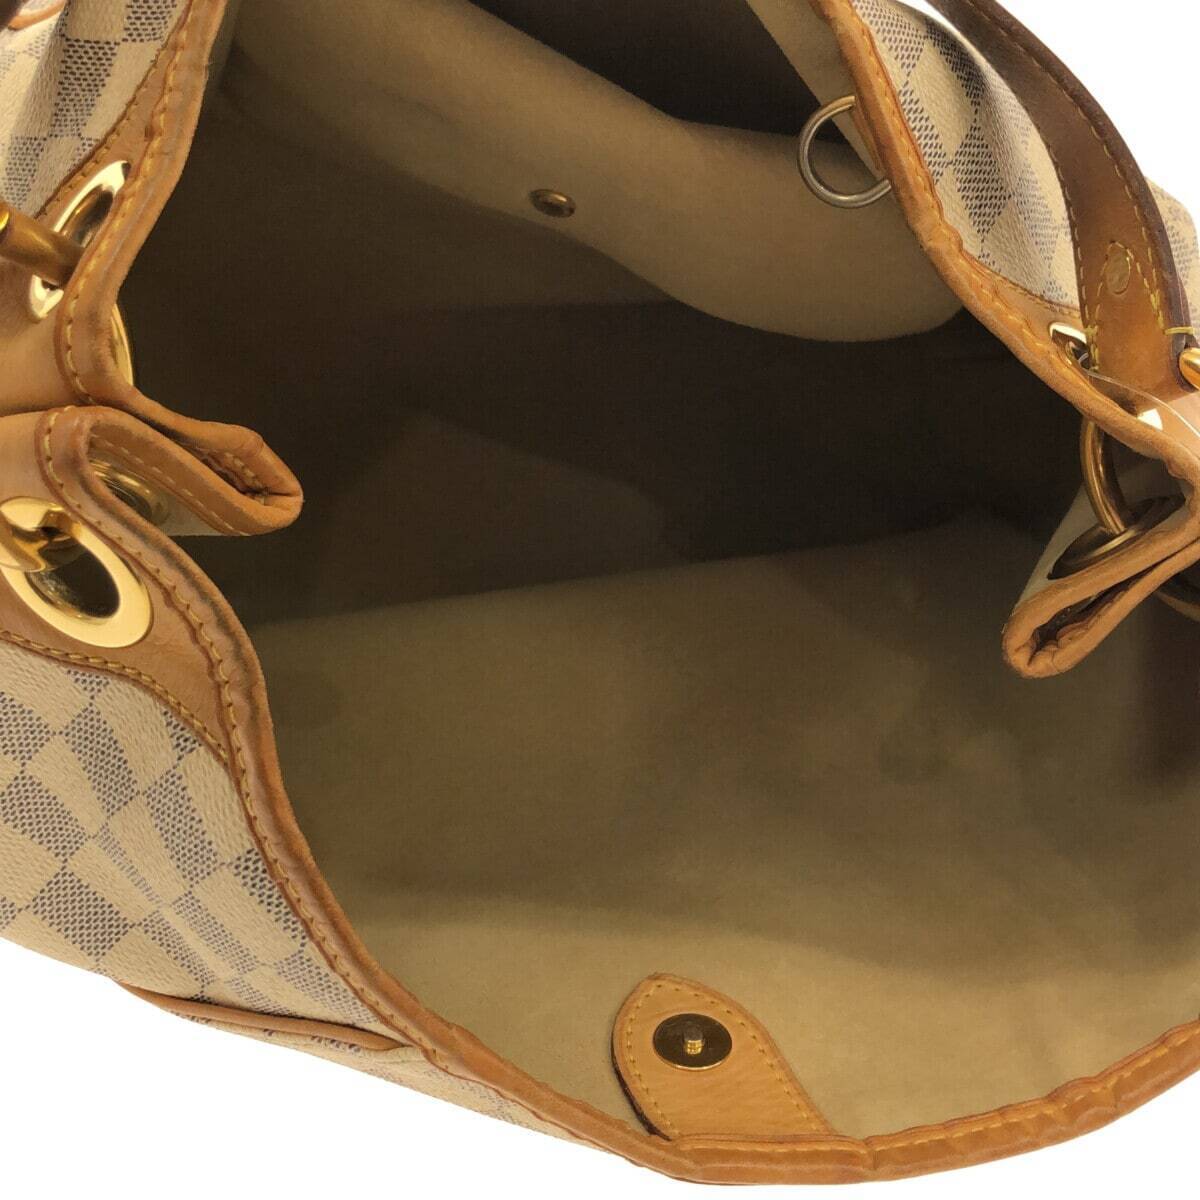 RARE Louis Vuitton Galliera PM Shoulder Bag - Damier Ebene Special Order